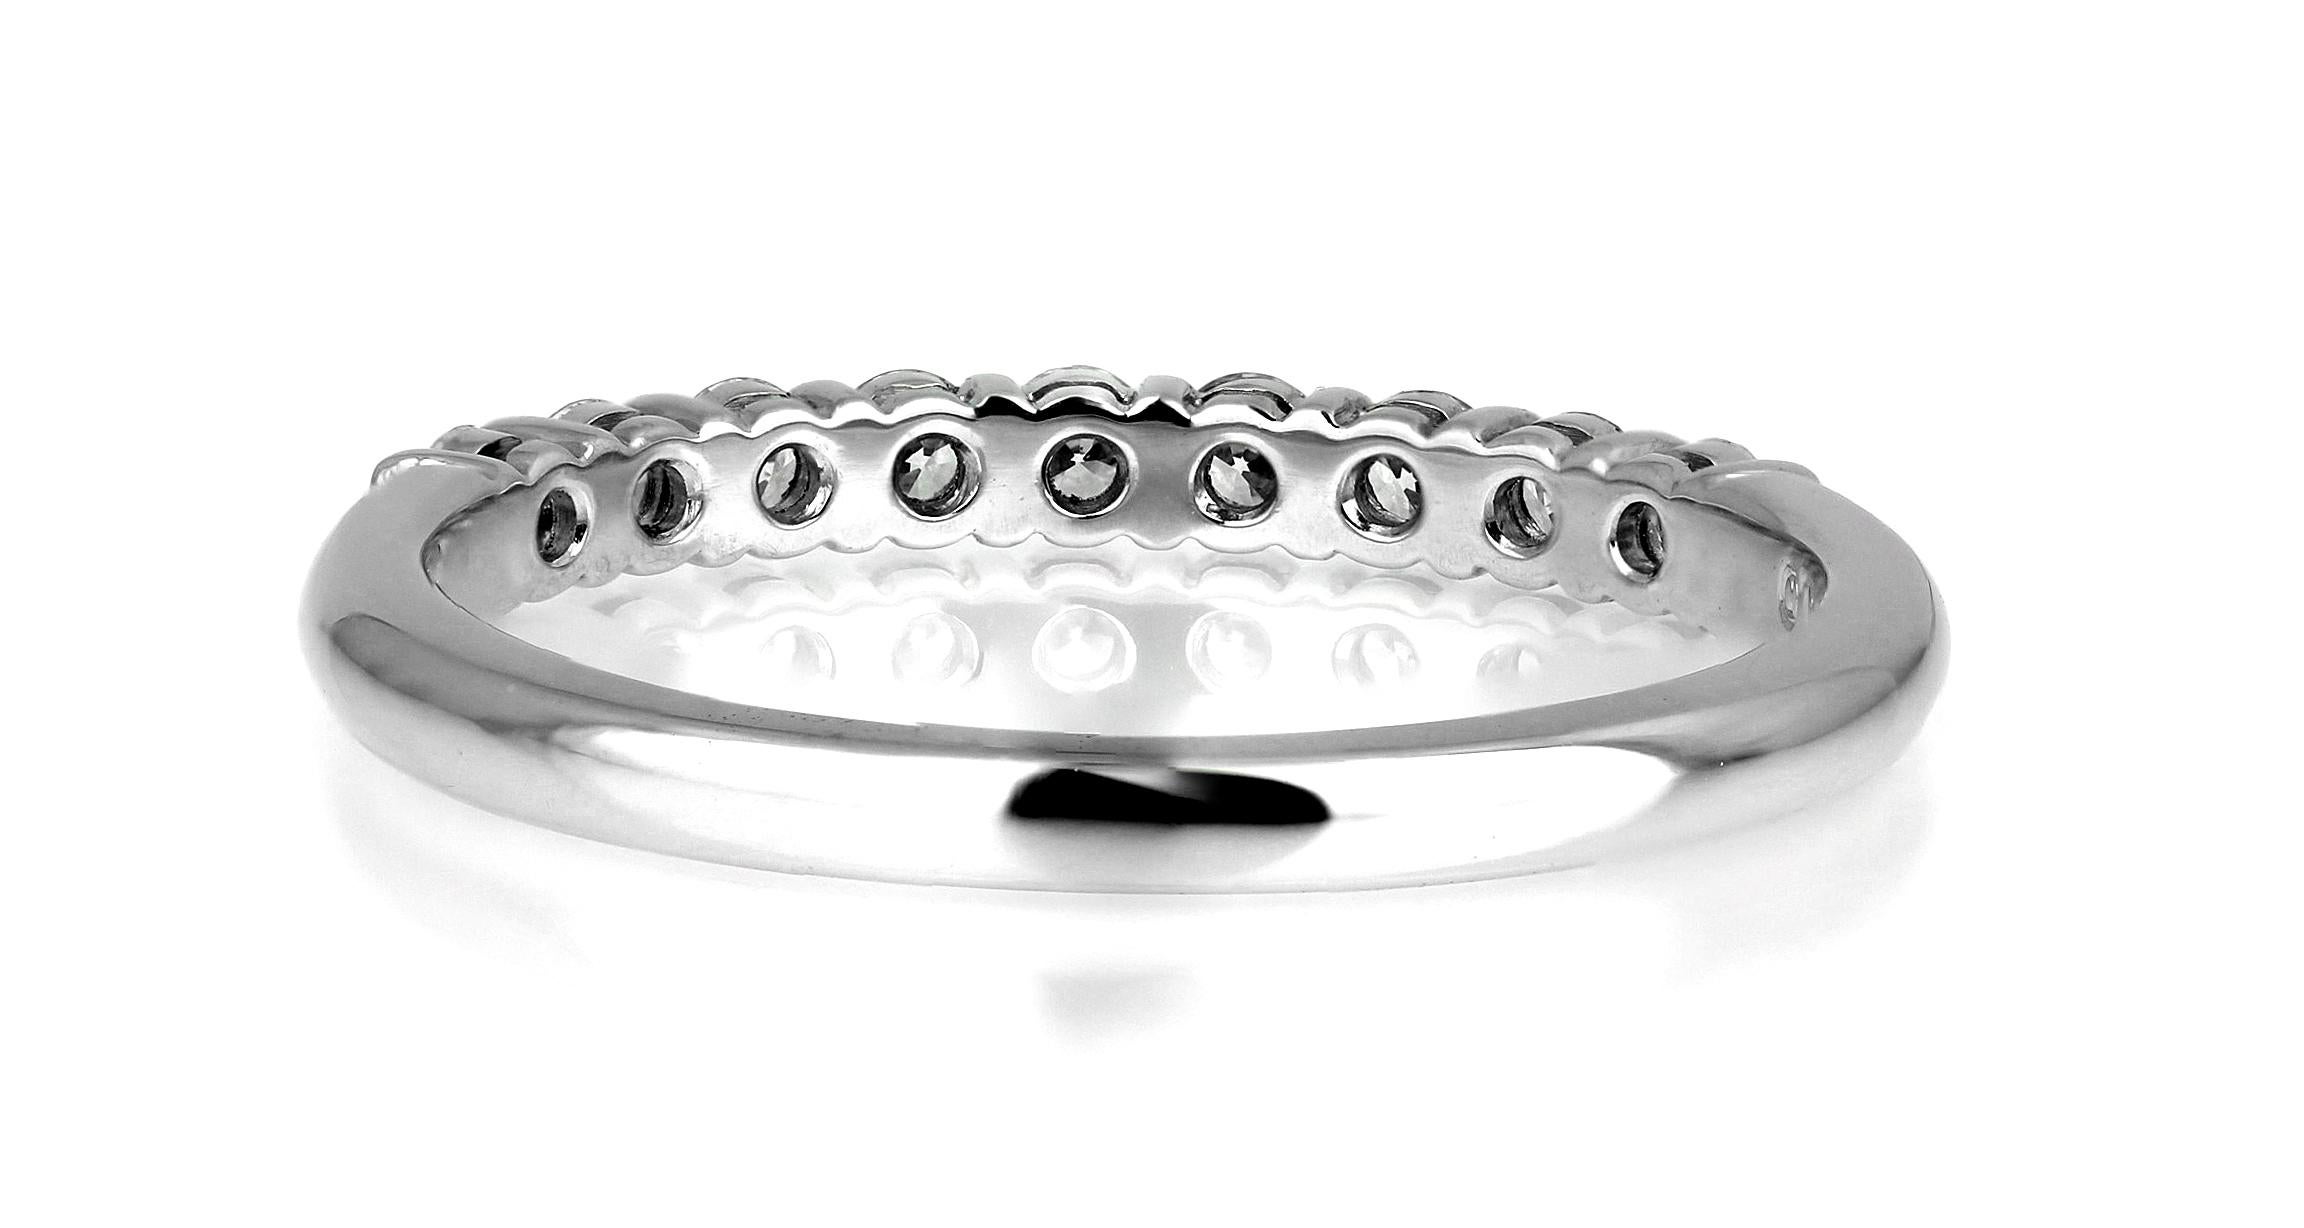 Brilliant Cut Tiffany & Co. Diamond Half Eternity Ring in Platinum, British Hallmarked 